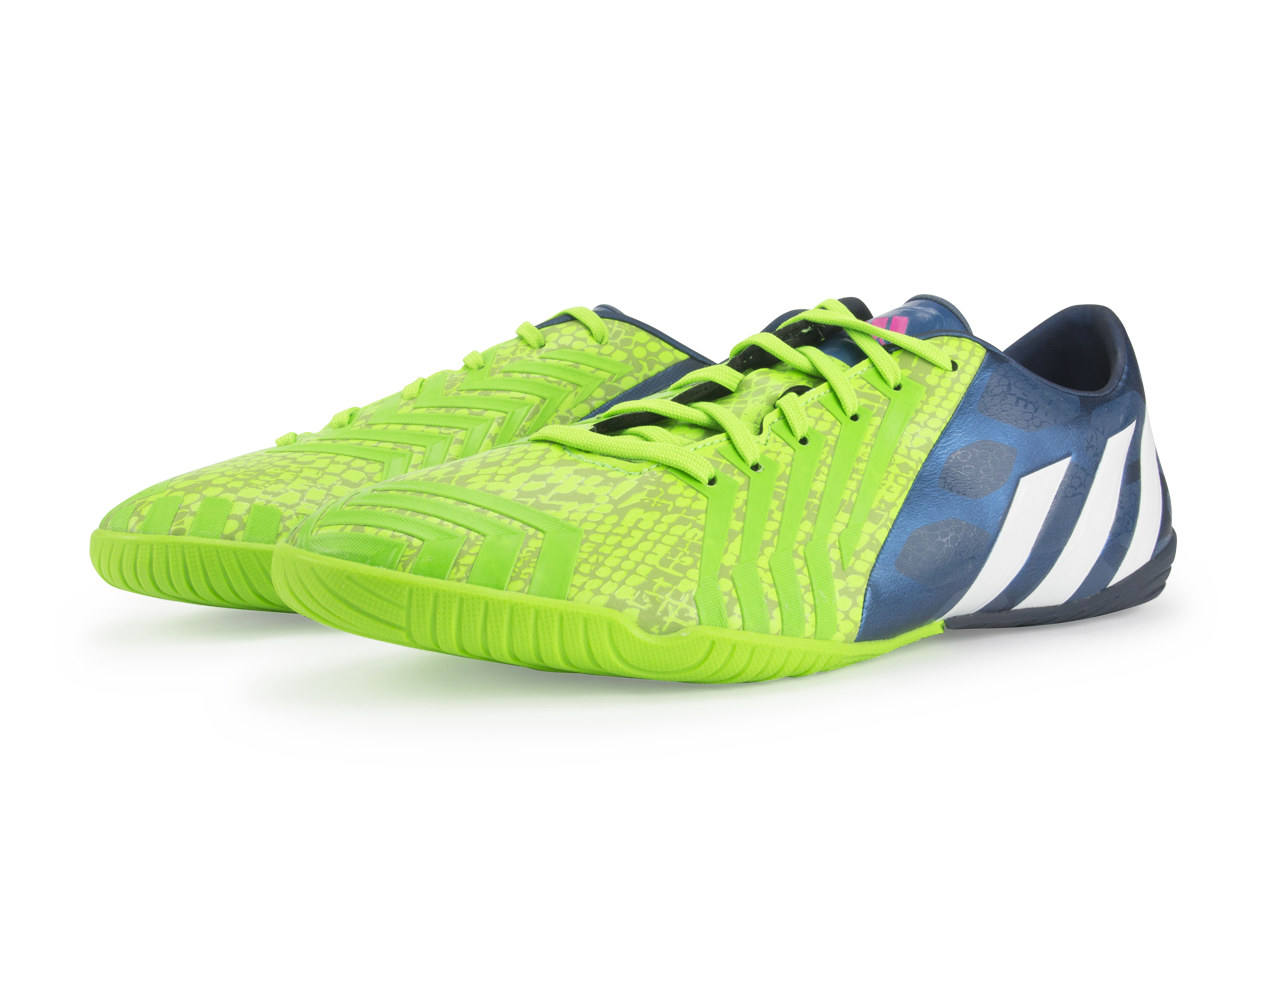 adidas Men's Predator Absolado Instinct Indoor Soccer Shoes Rich Blue/Running White/Neon Green